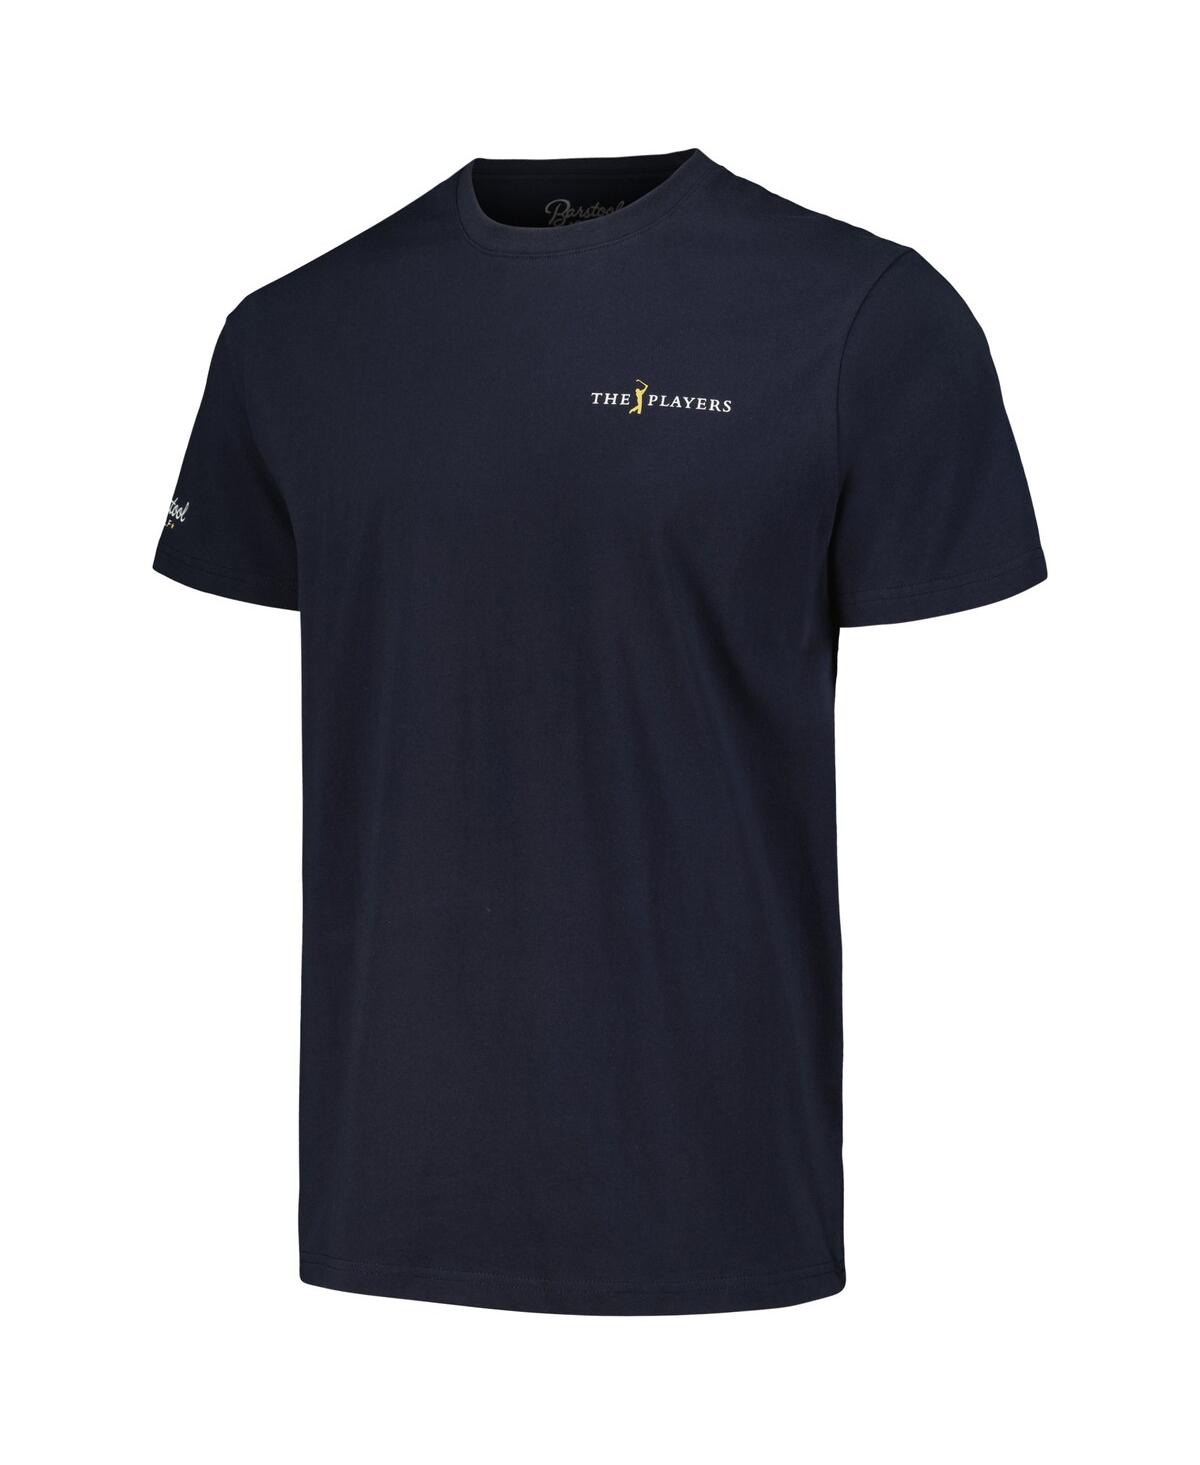 Shop Barstool Golf Men's  Navy The Players T-shirt